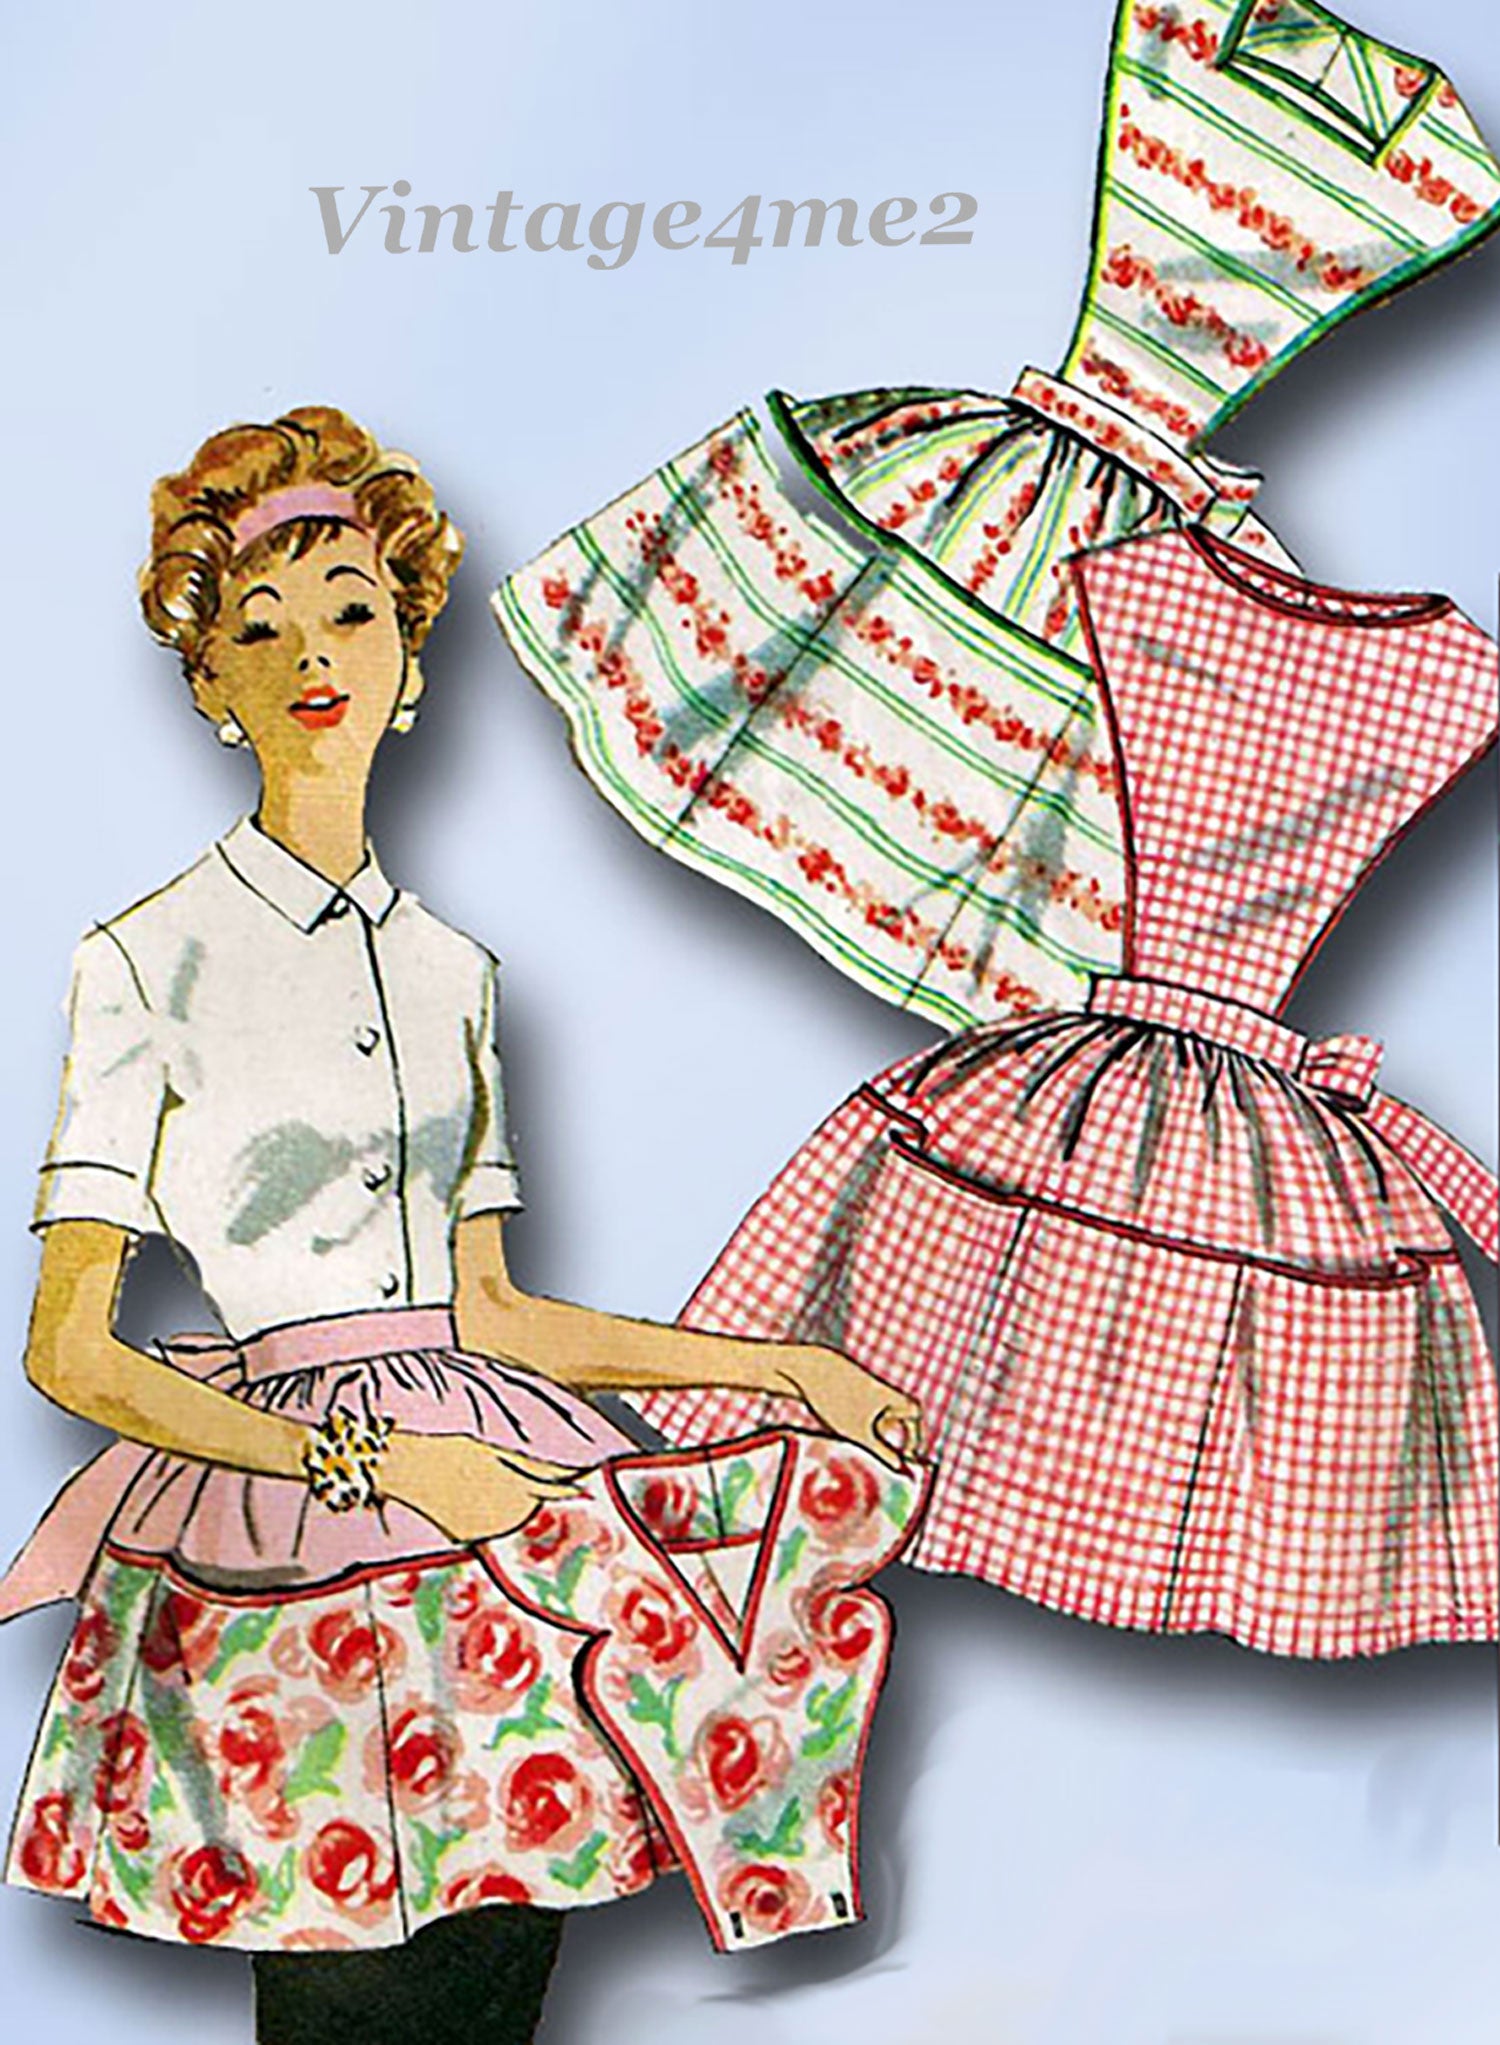 1950s Vintage Simplicity Sewing Pattern 4857 Easy Misses 1 Yard Apron –  Vintage4me2